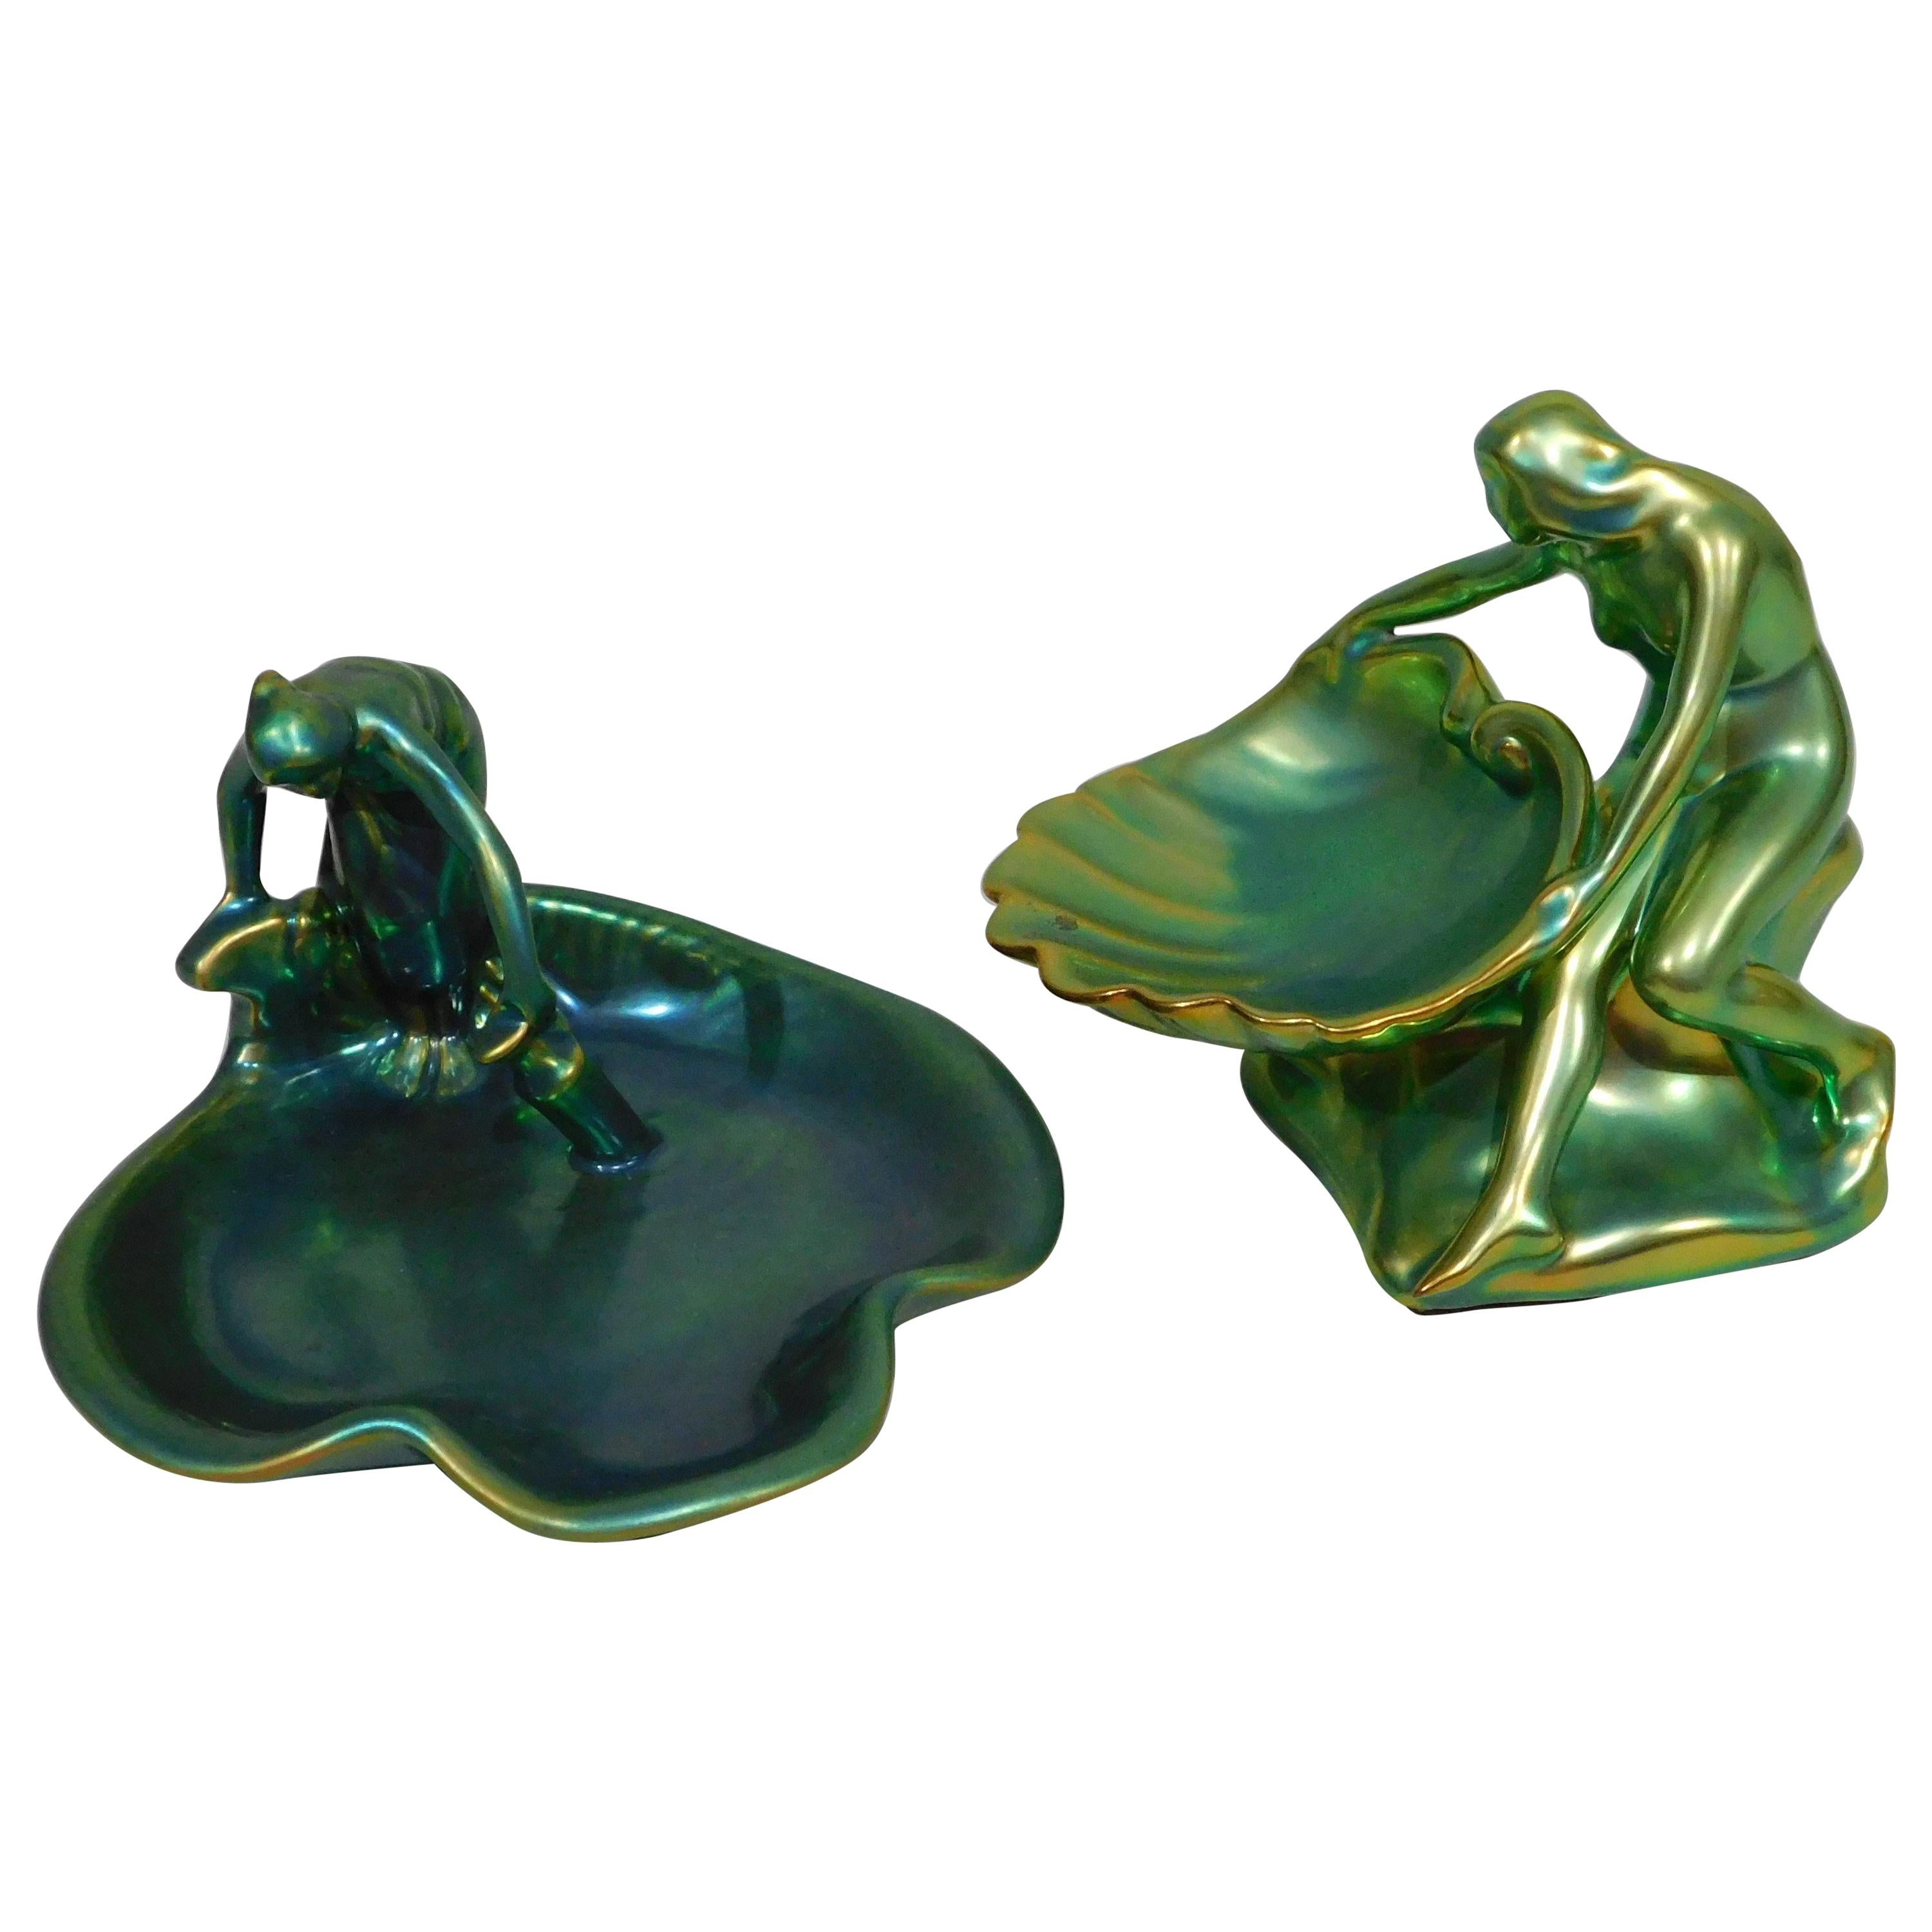 Pair of Zsolnay Decorative Ceramic Figurative Dishes with Eosin Glaze